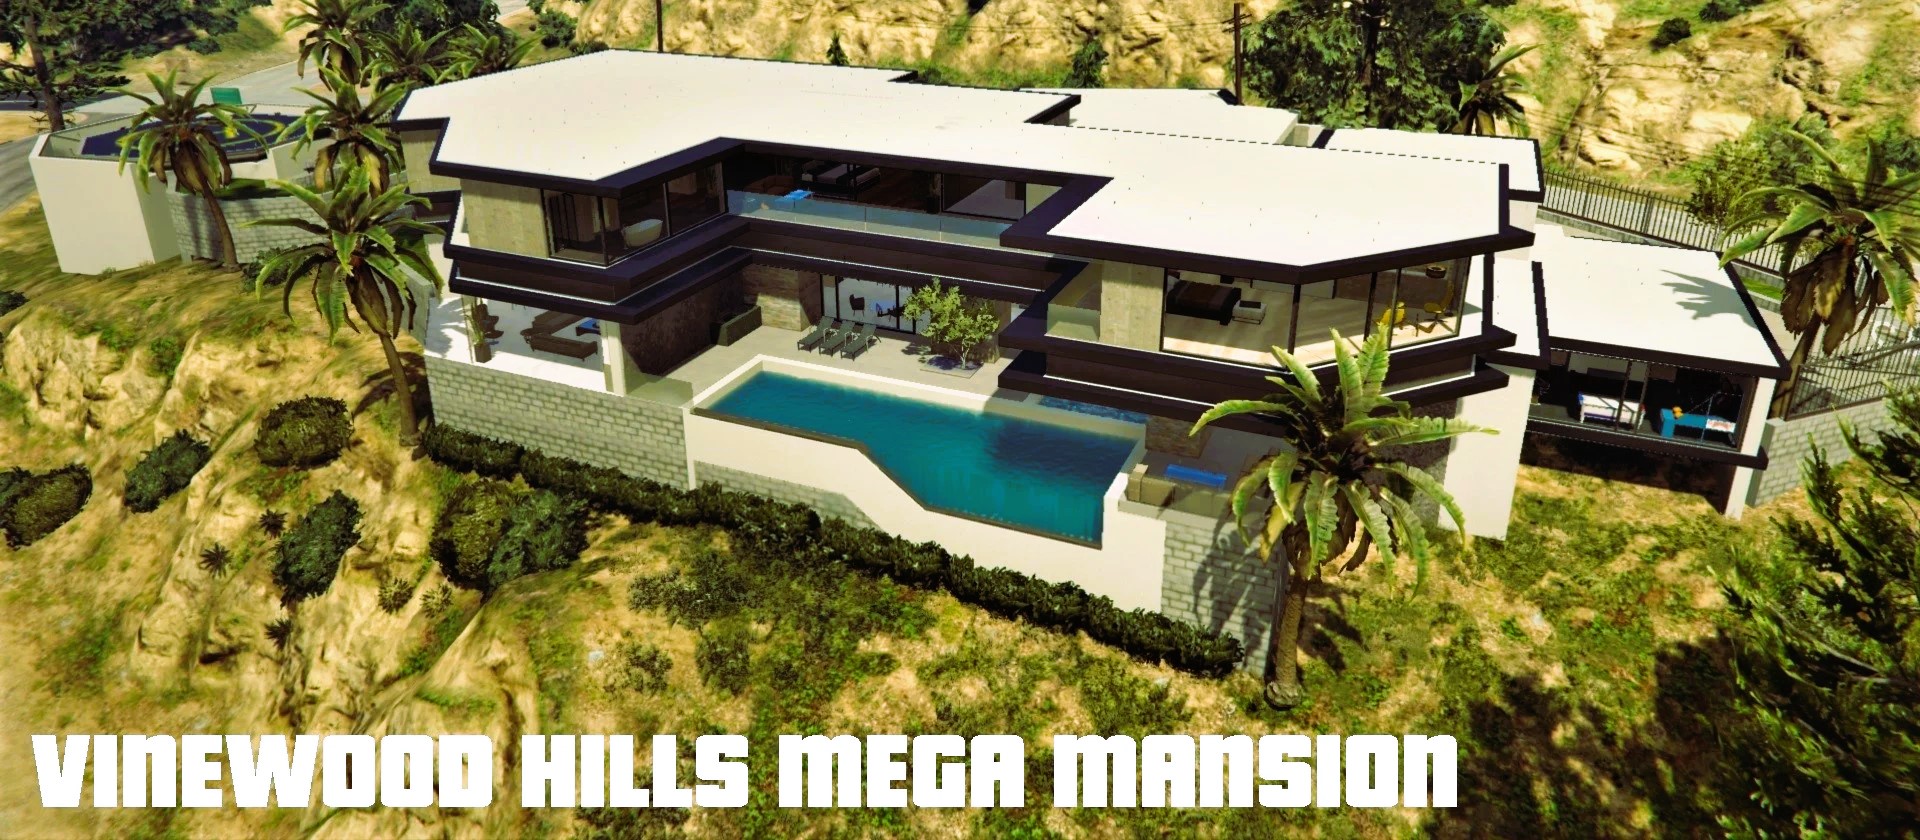 Vinewood Hills Mega Mansion